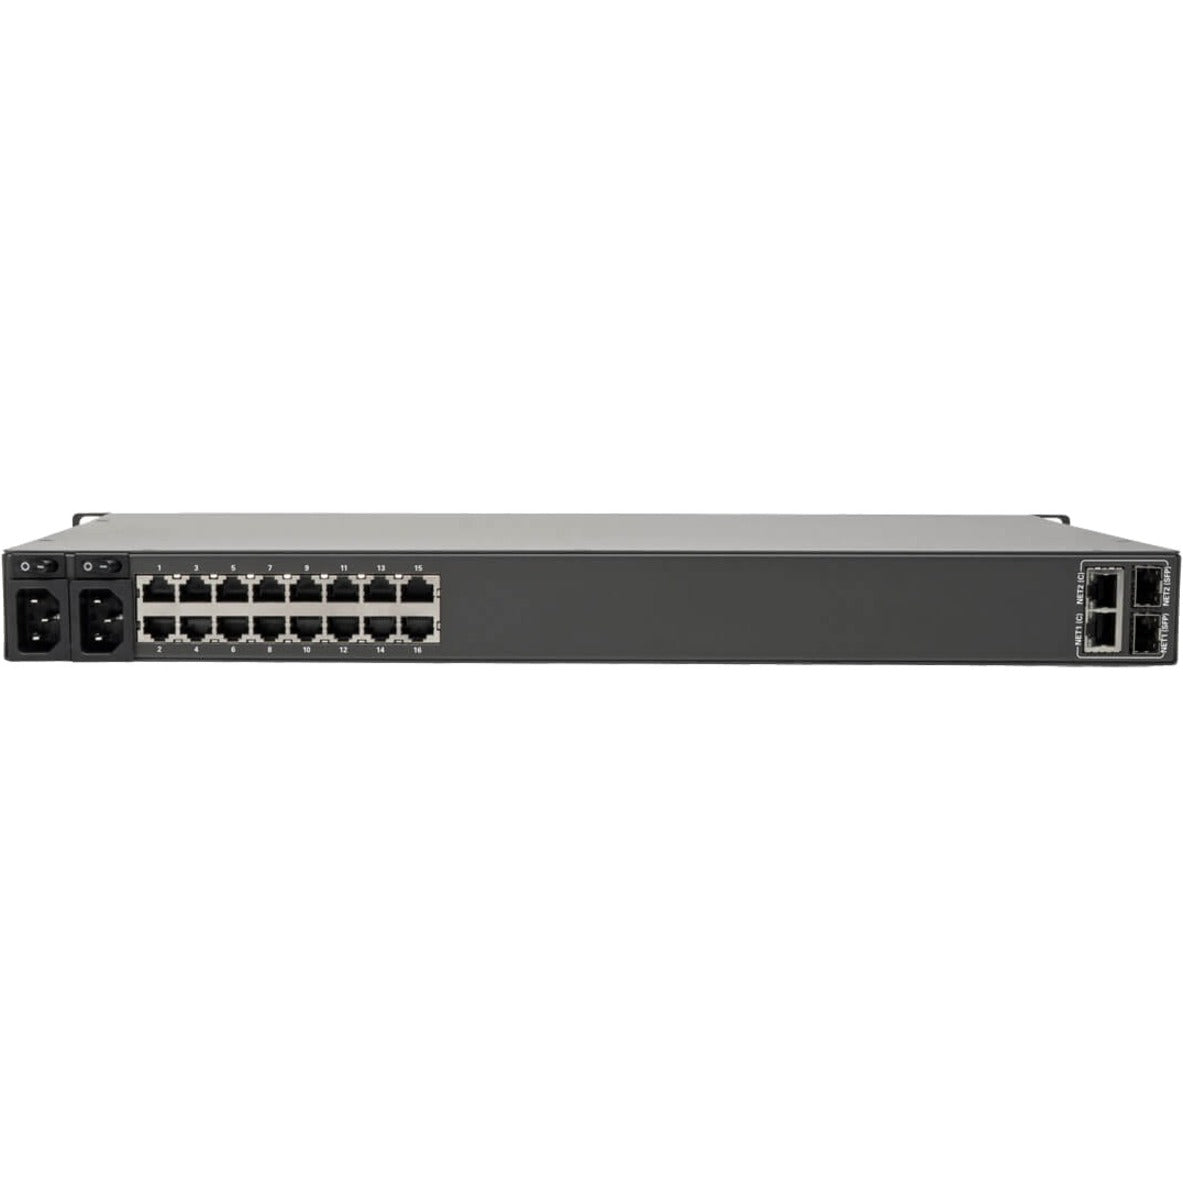 Tripp Lite B098-016-V 16-Port Serial Console Server, USB, Gigabit Ethernet, Rack-mountable, 2 Year Warranty